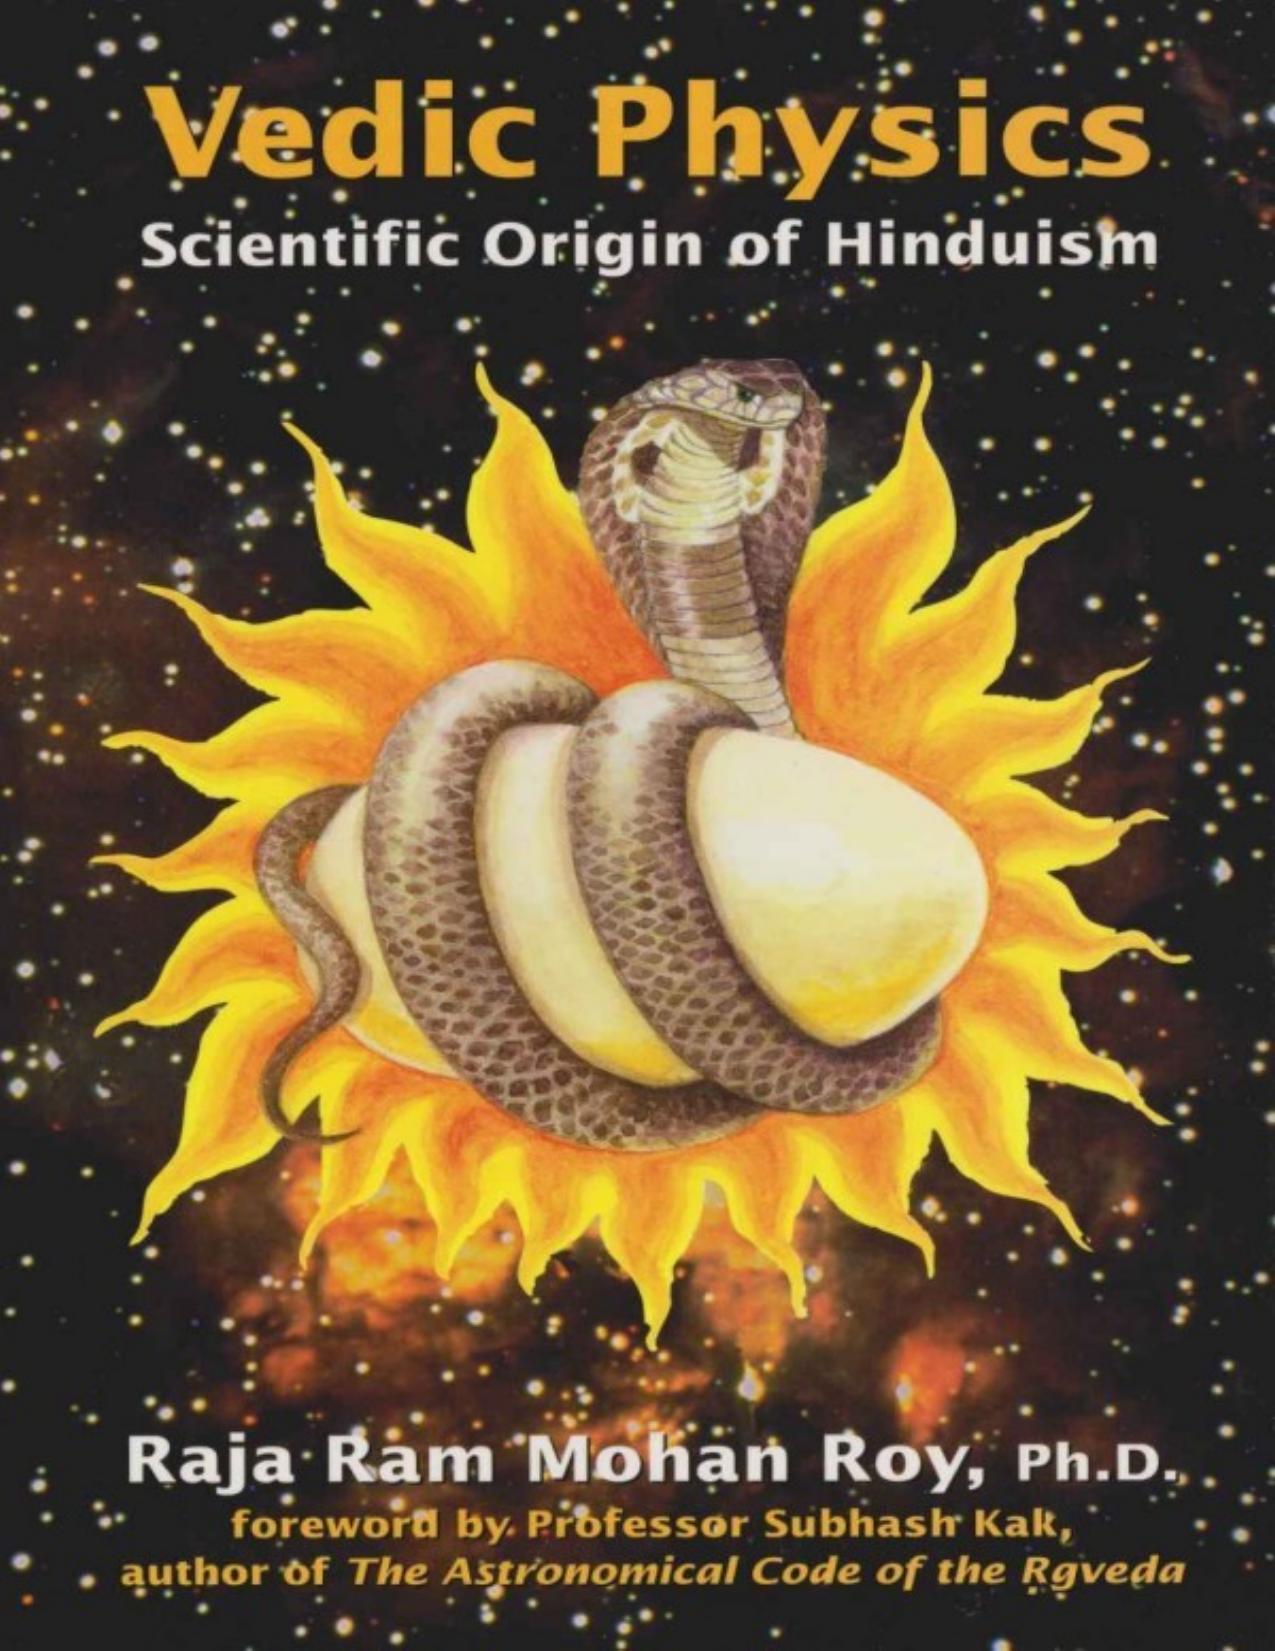 Vedic Physics: Scientific Origin of Hinduism by Raja Ram Mohan Roy